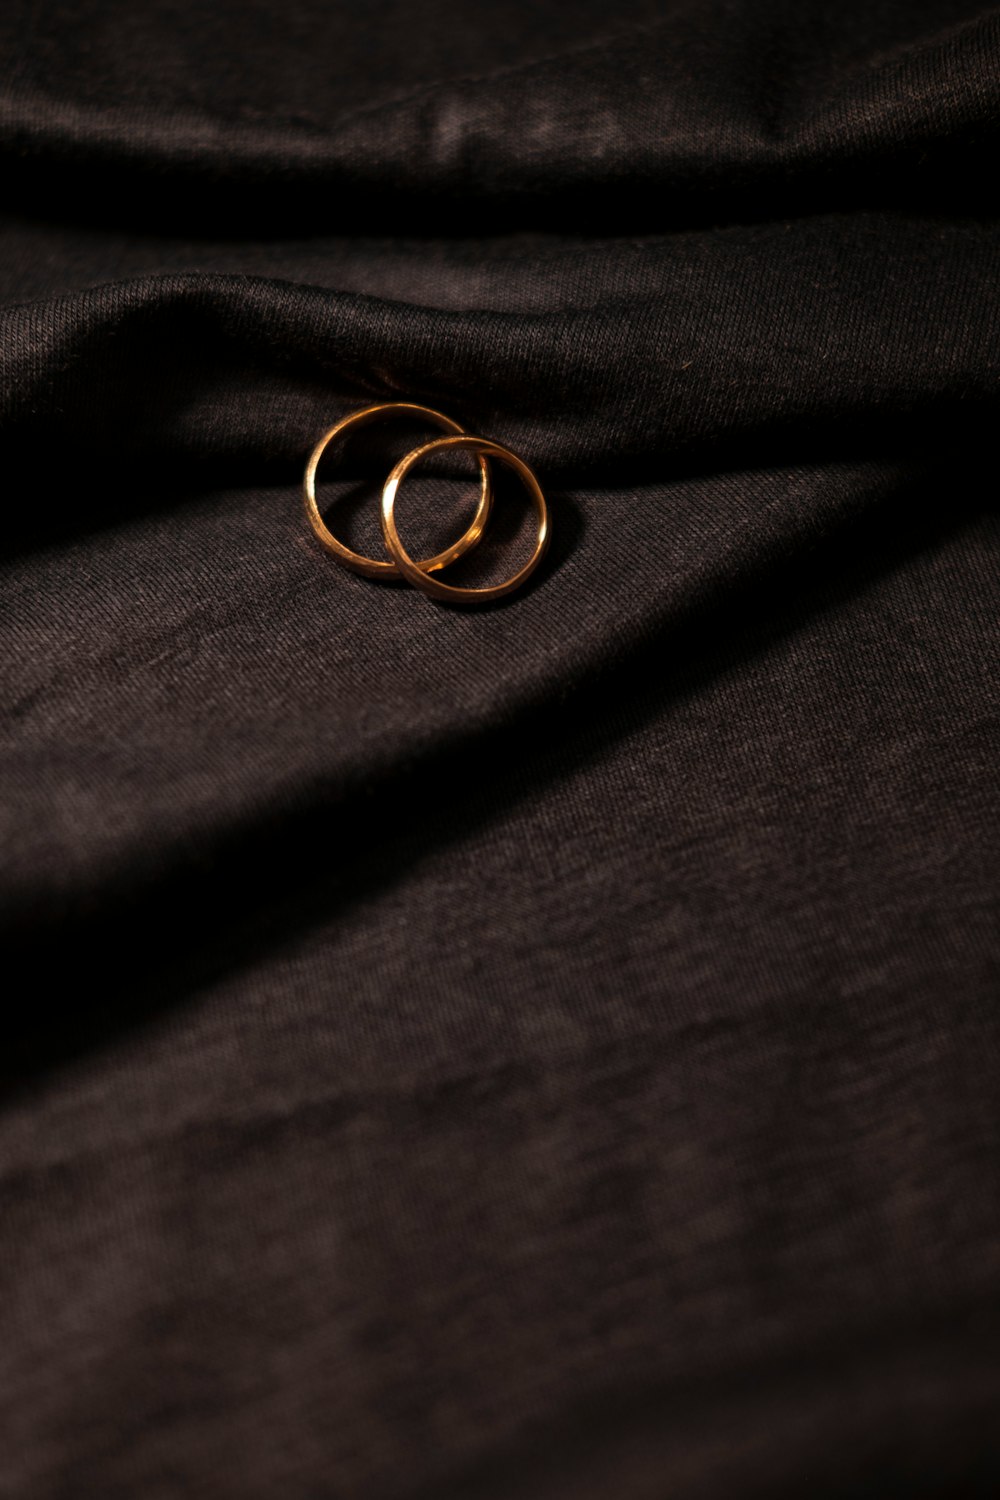 gold ring on black textile